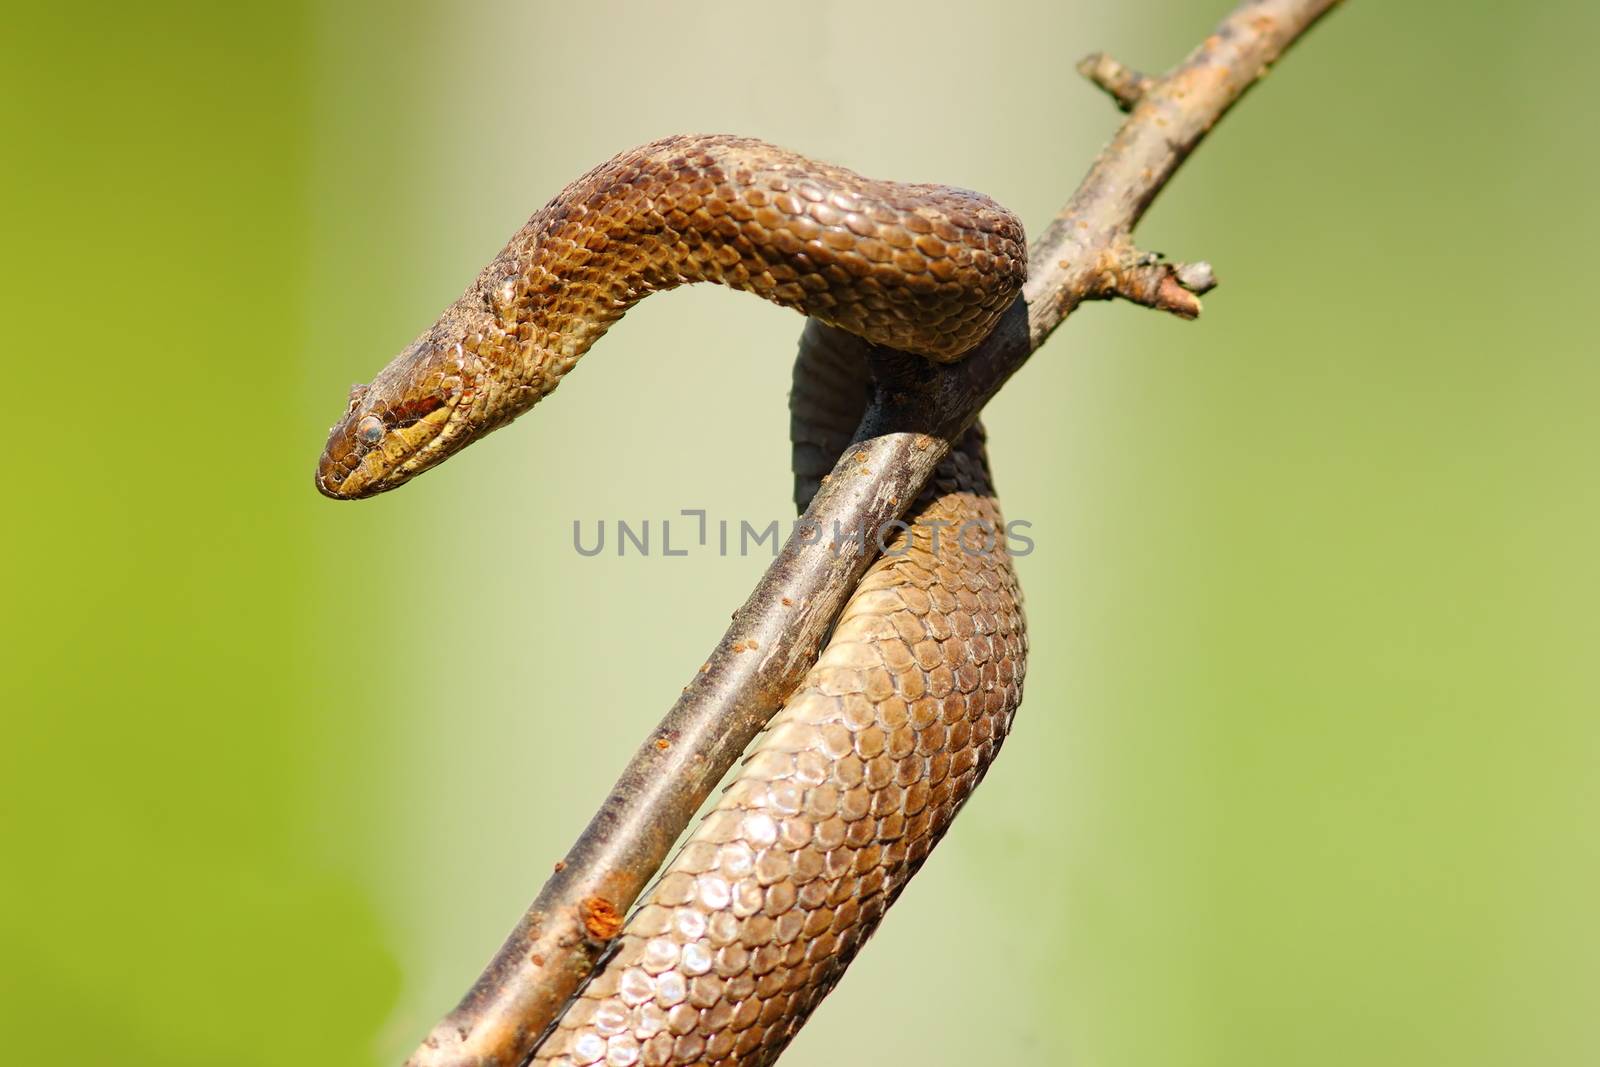 smooth snake after hibernation by taviphoto